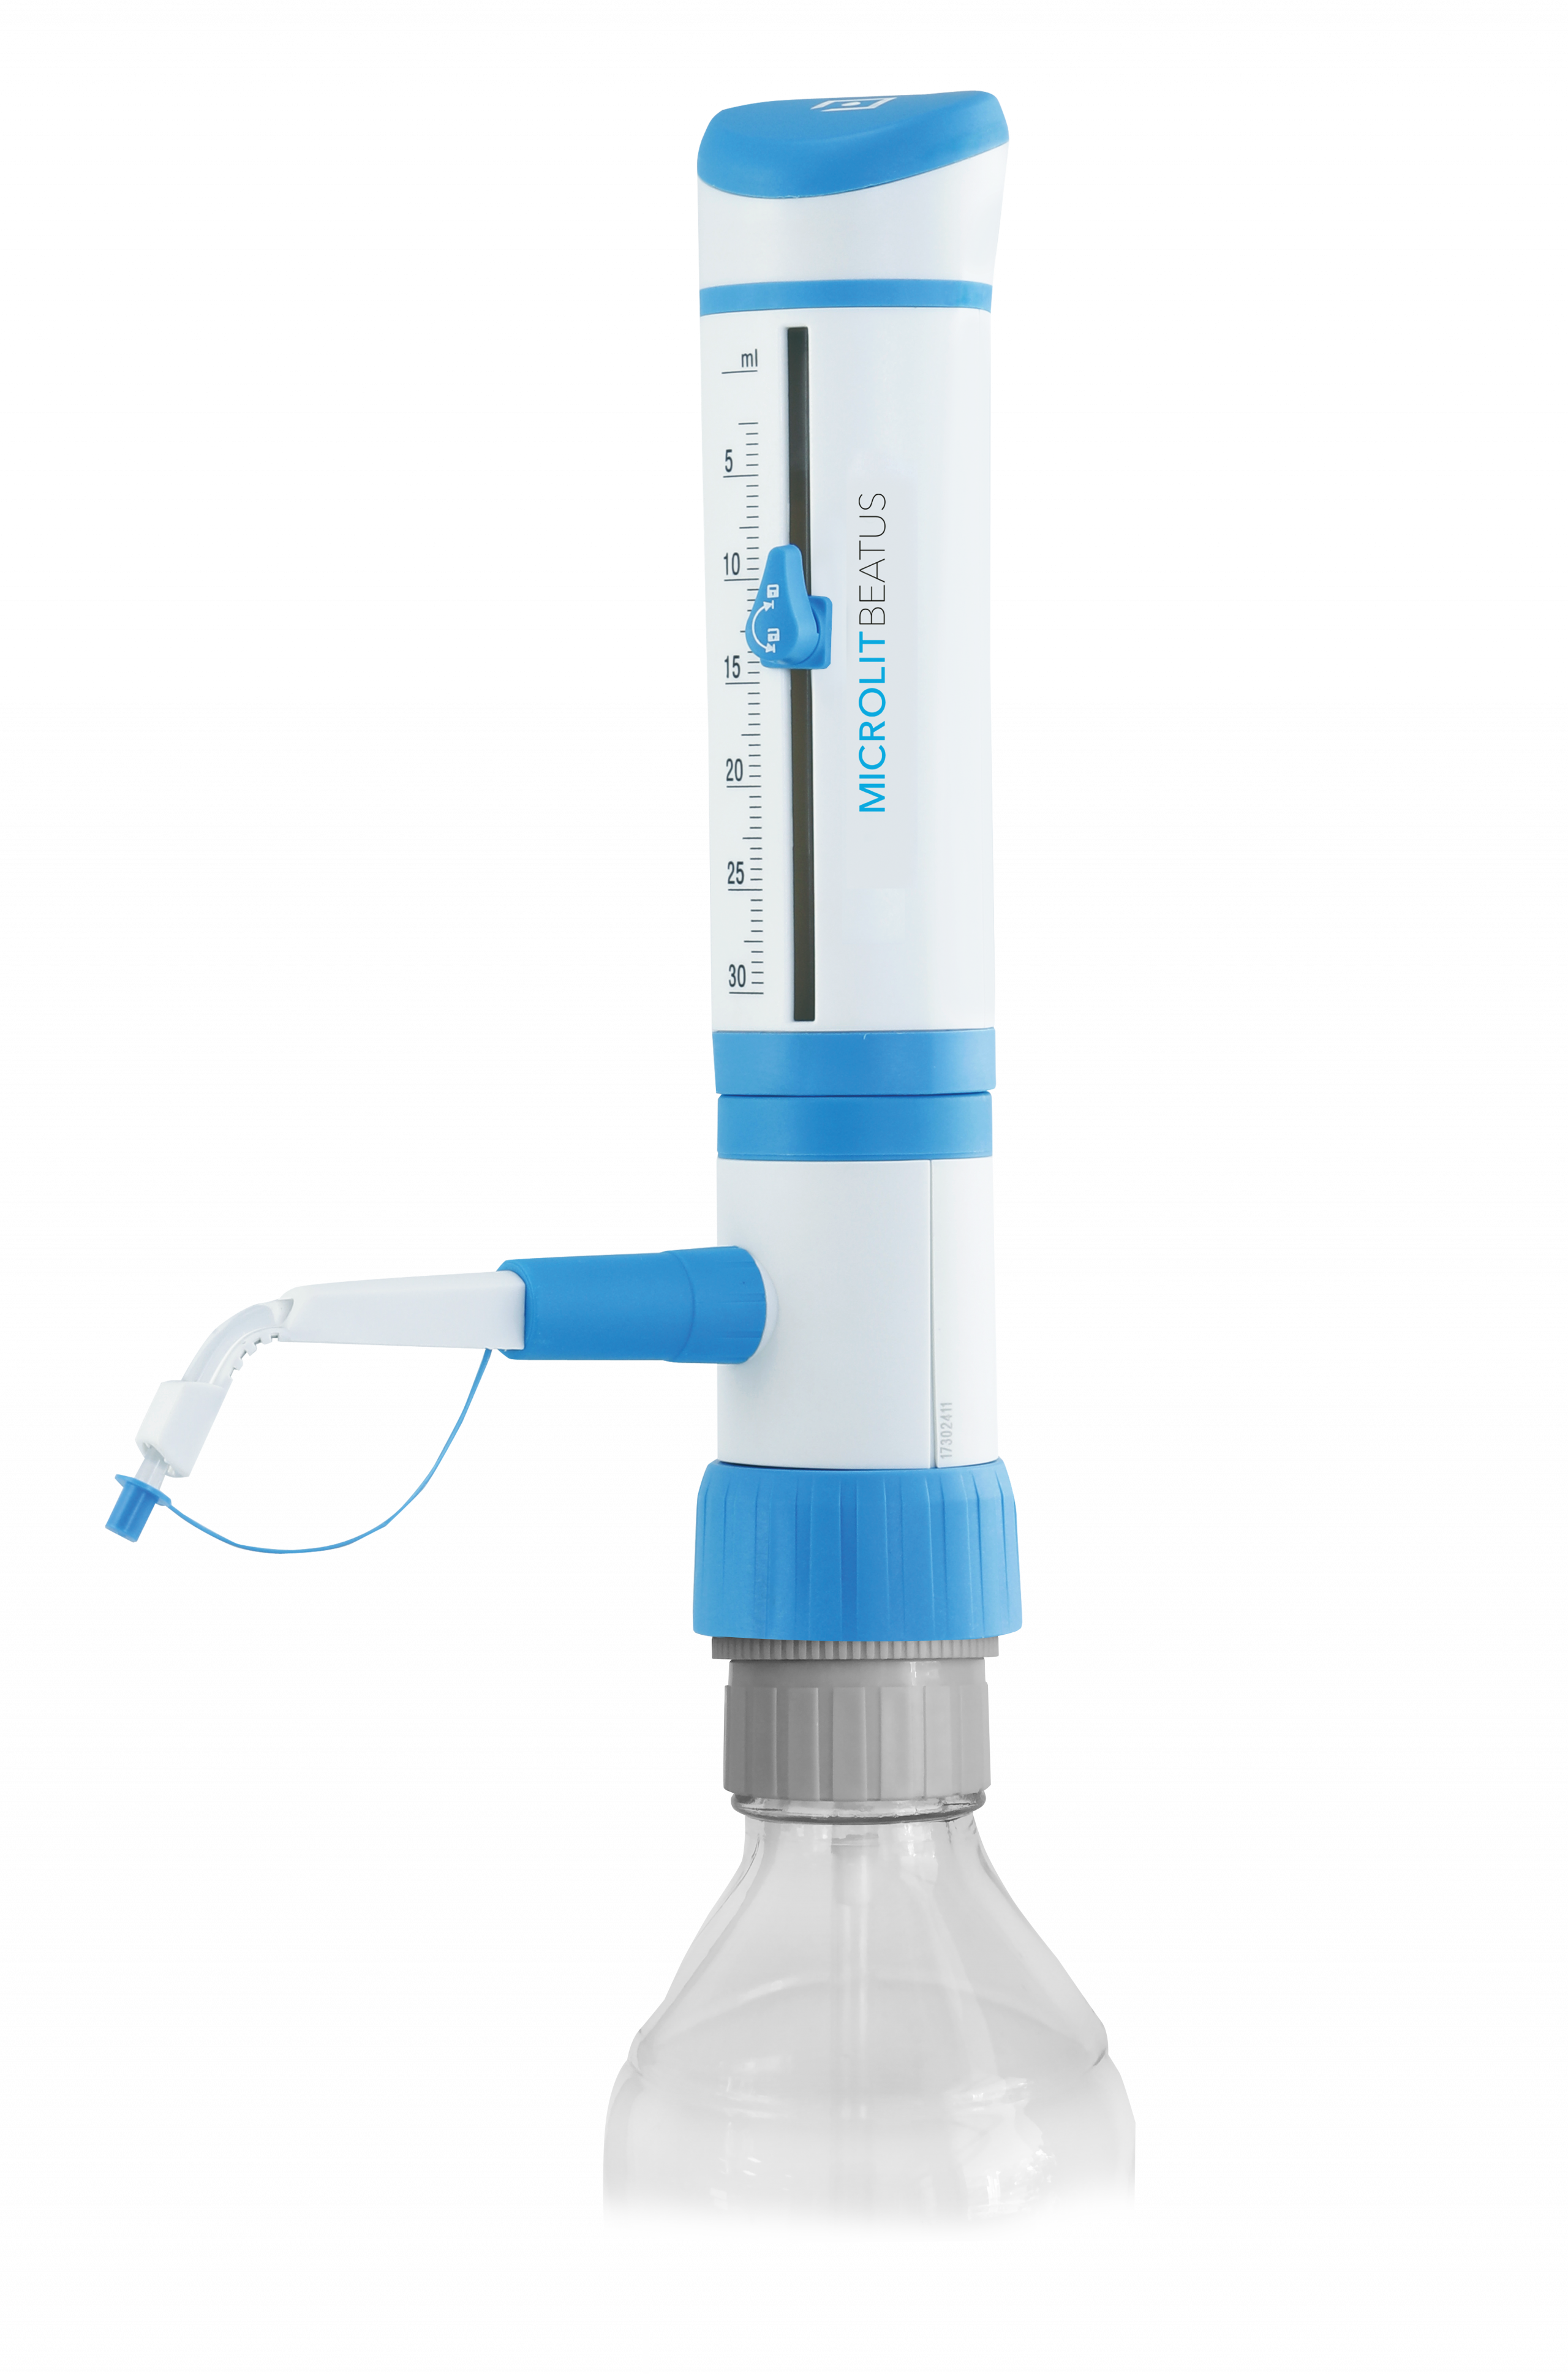 Microlit BEATUS Bottle Top Dispenser